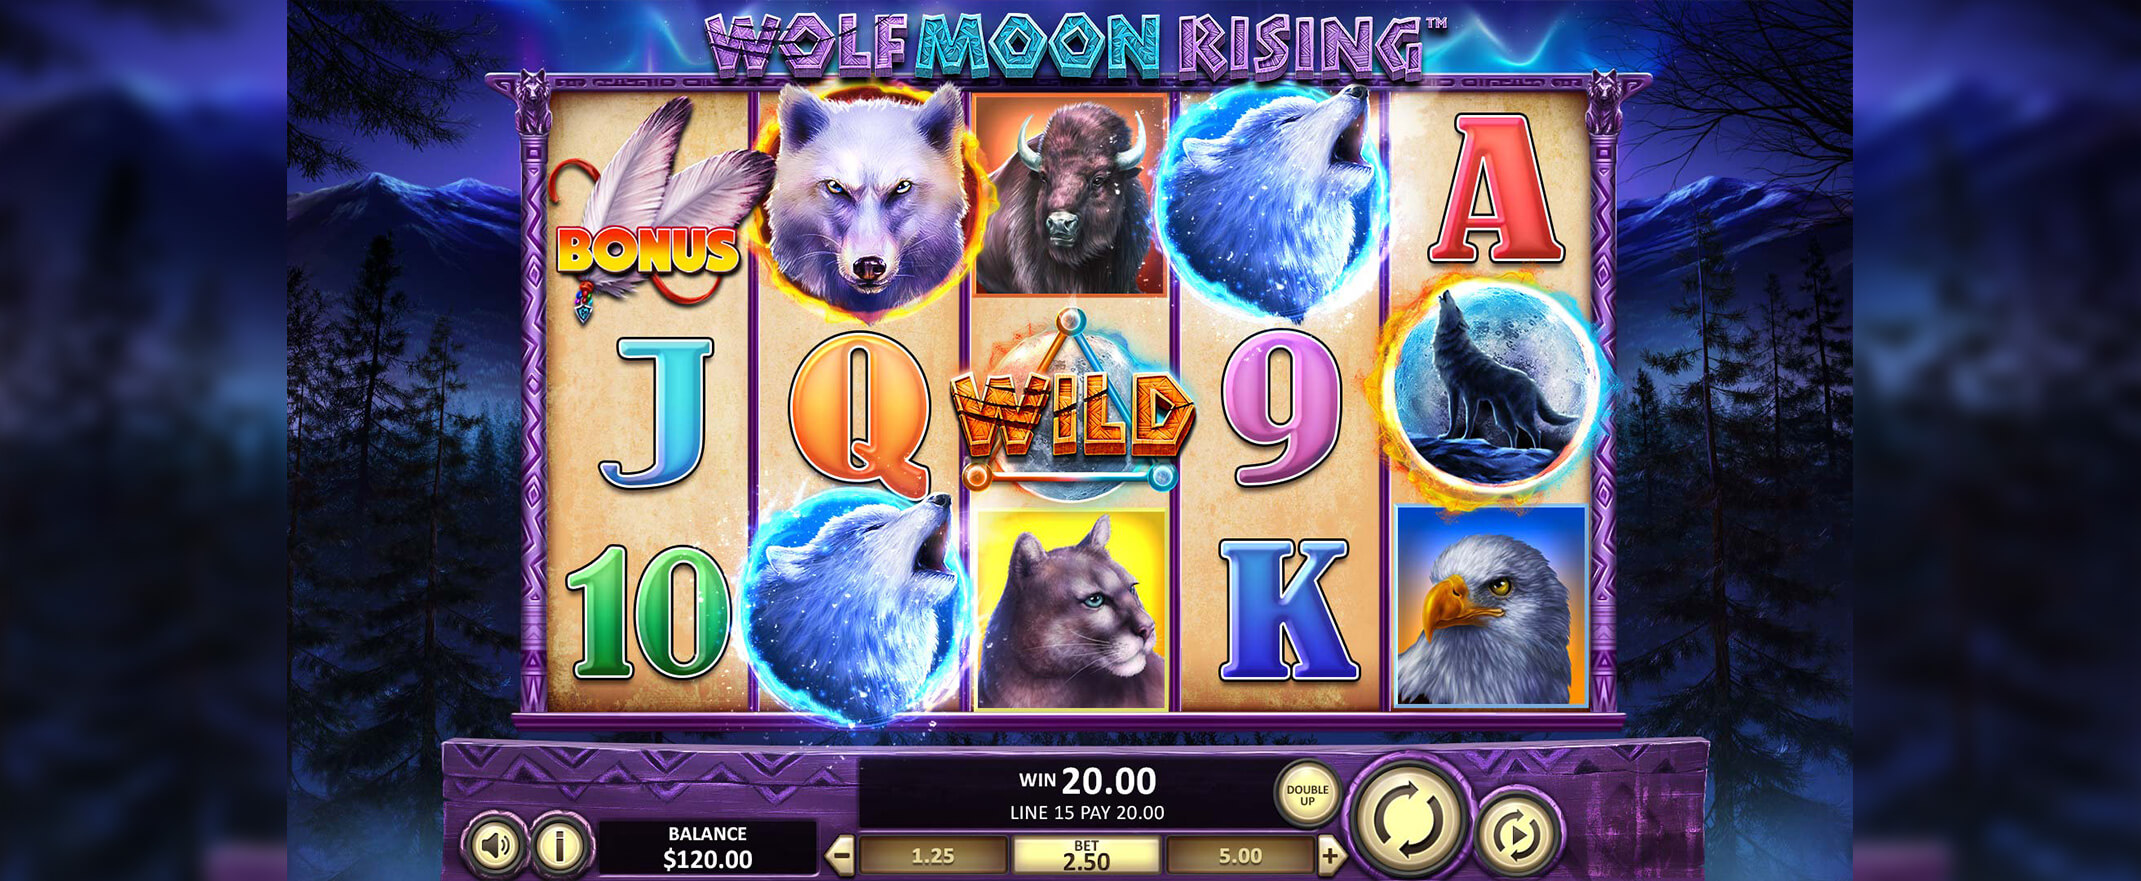 Wolf Moon Rising Spielautomat